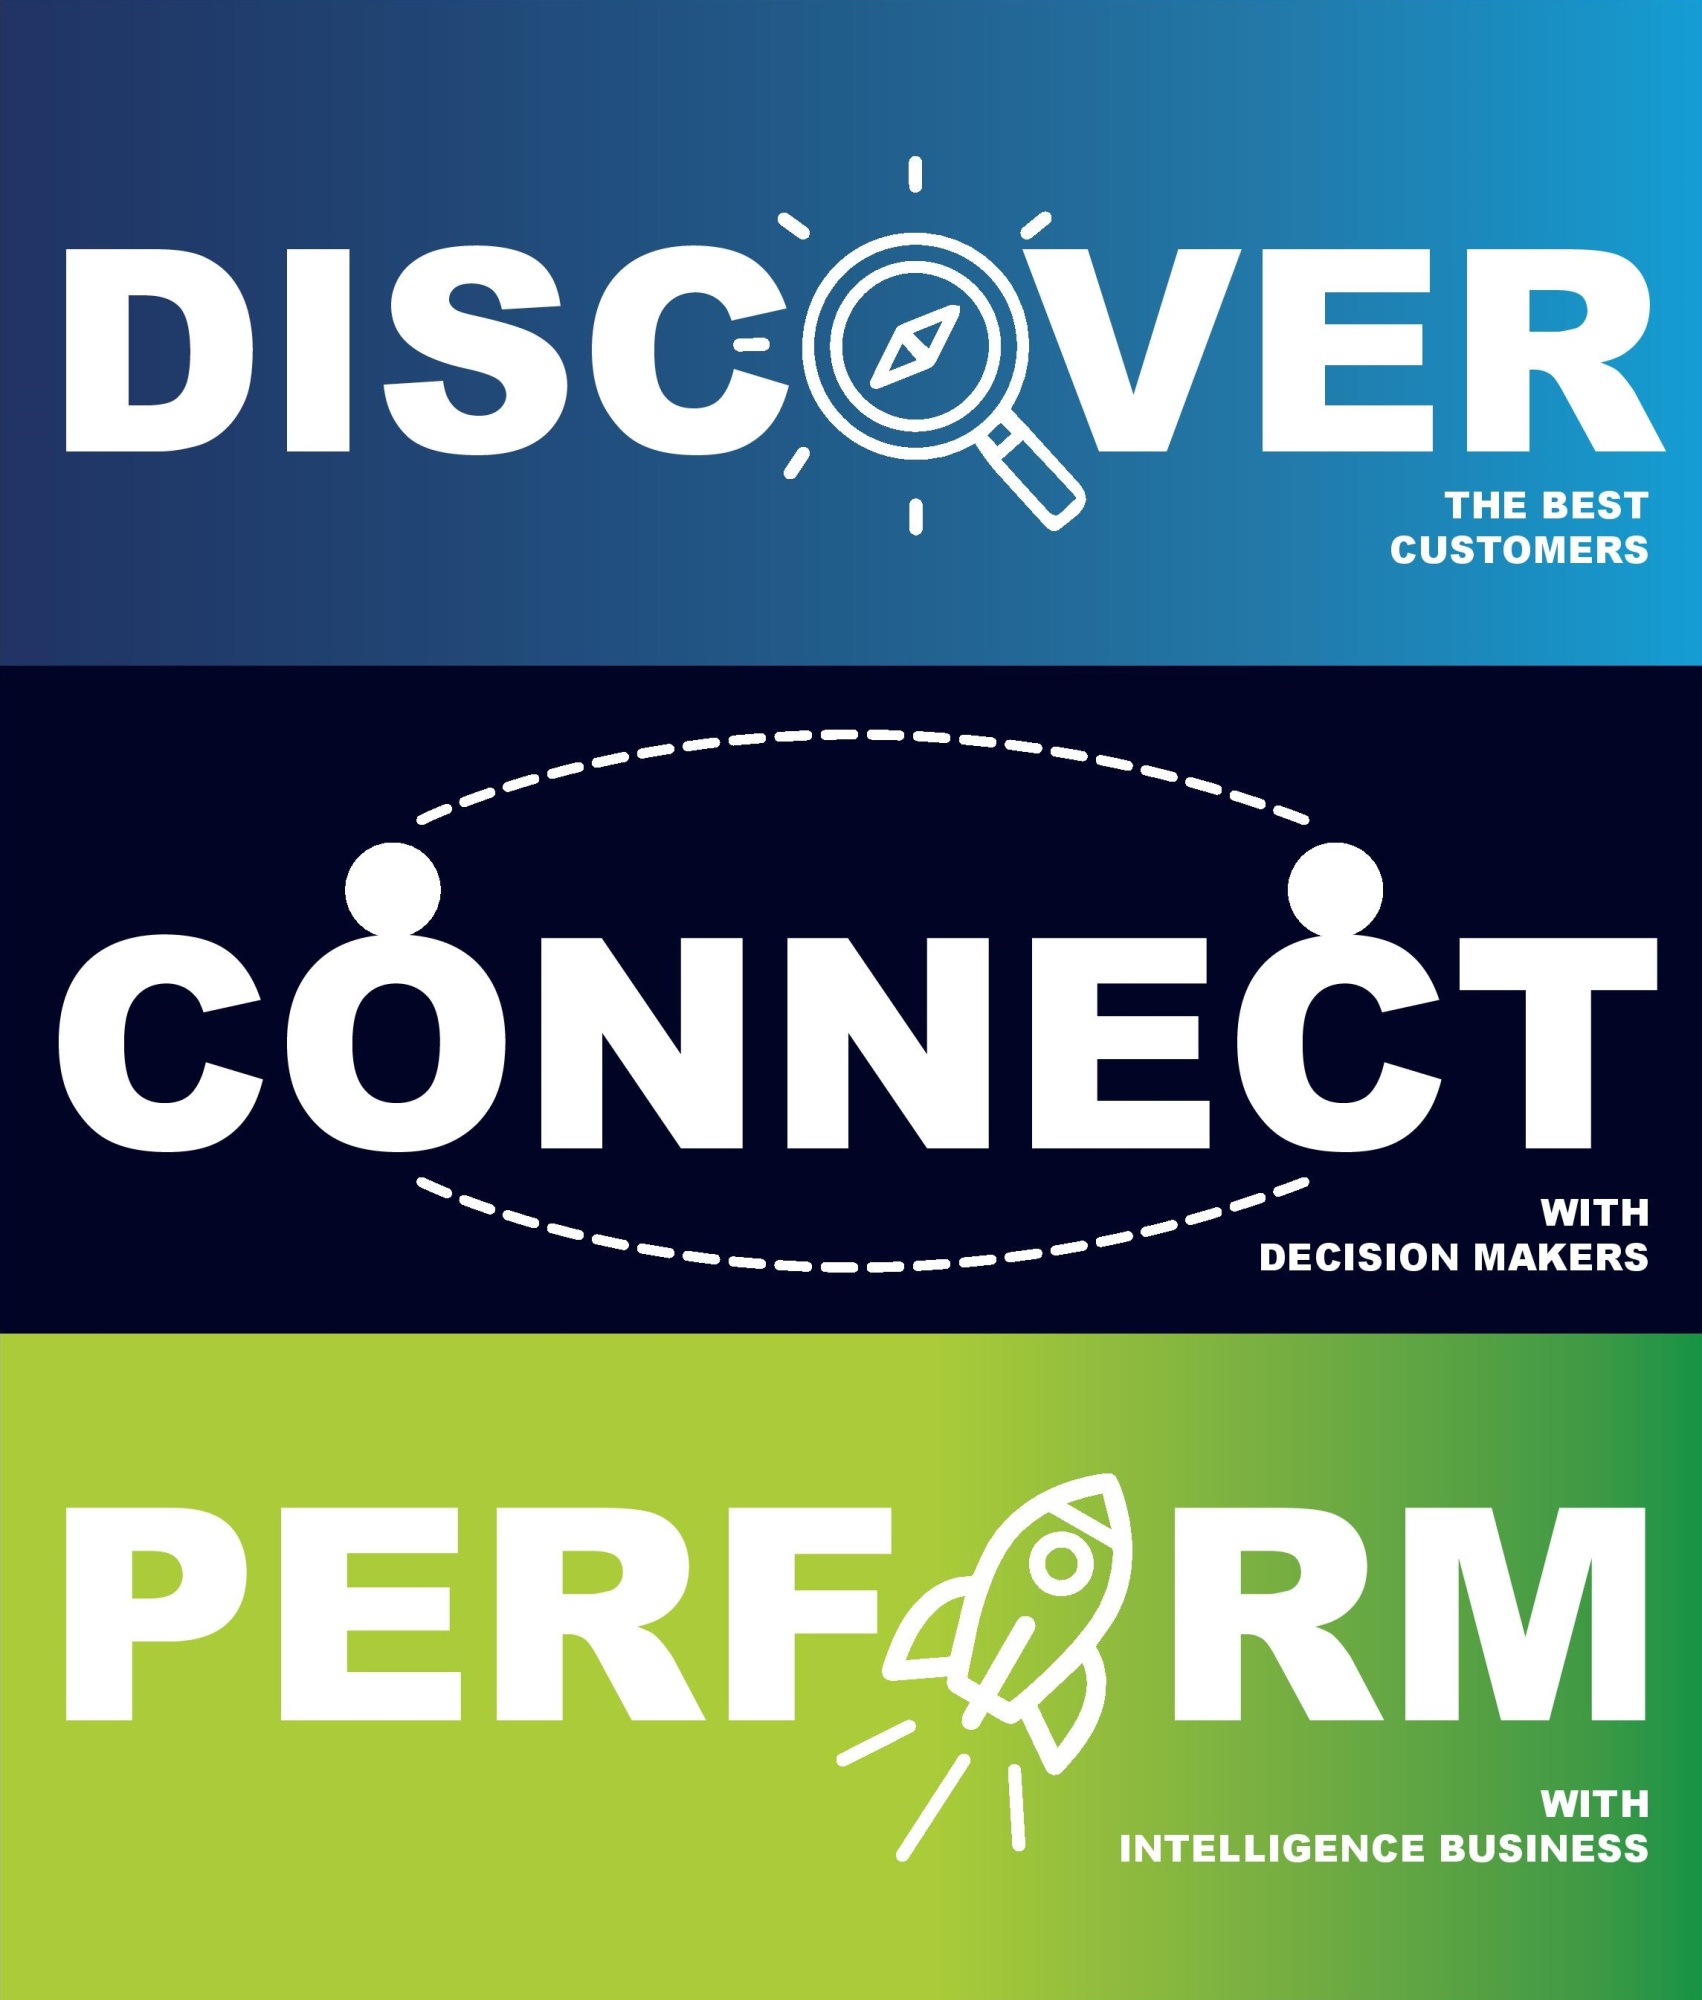 Discoer Connect Perform slogan